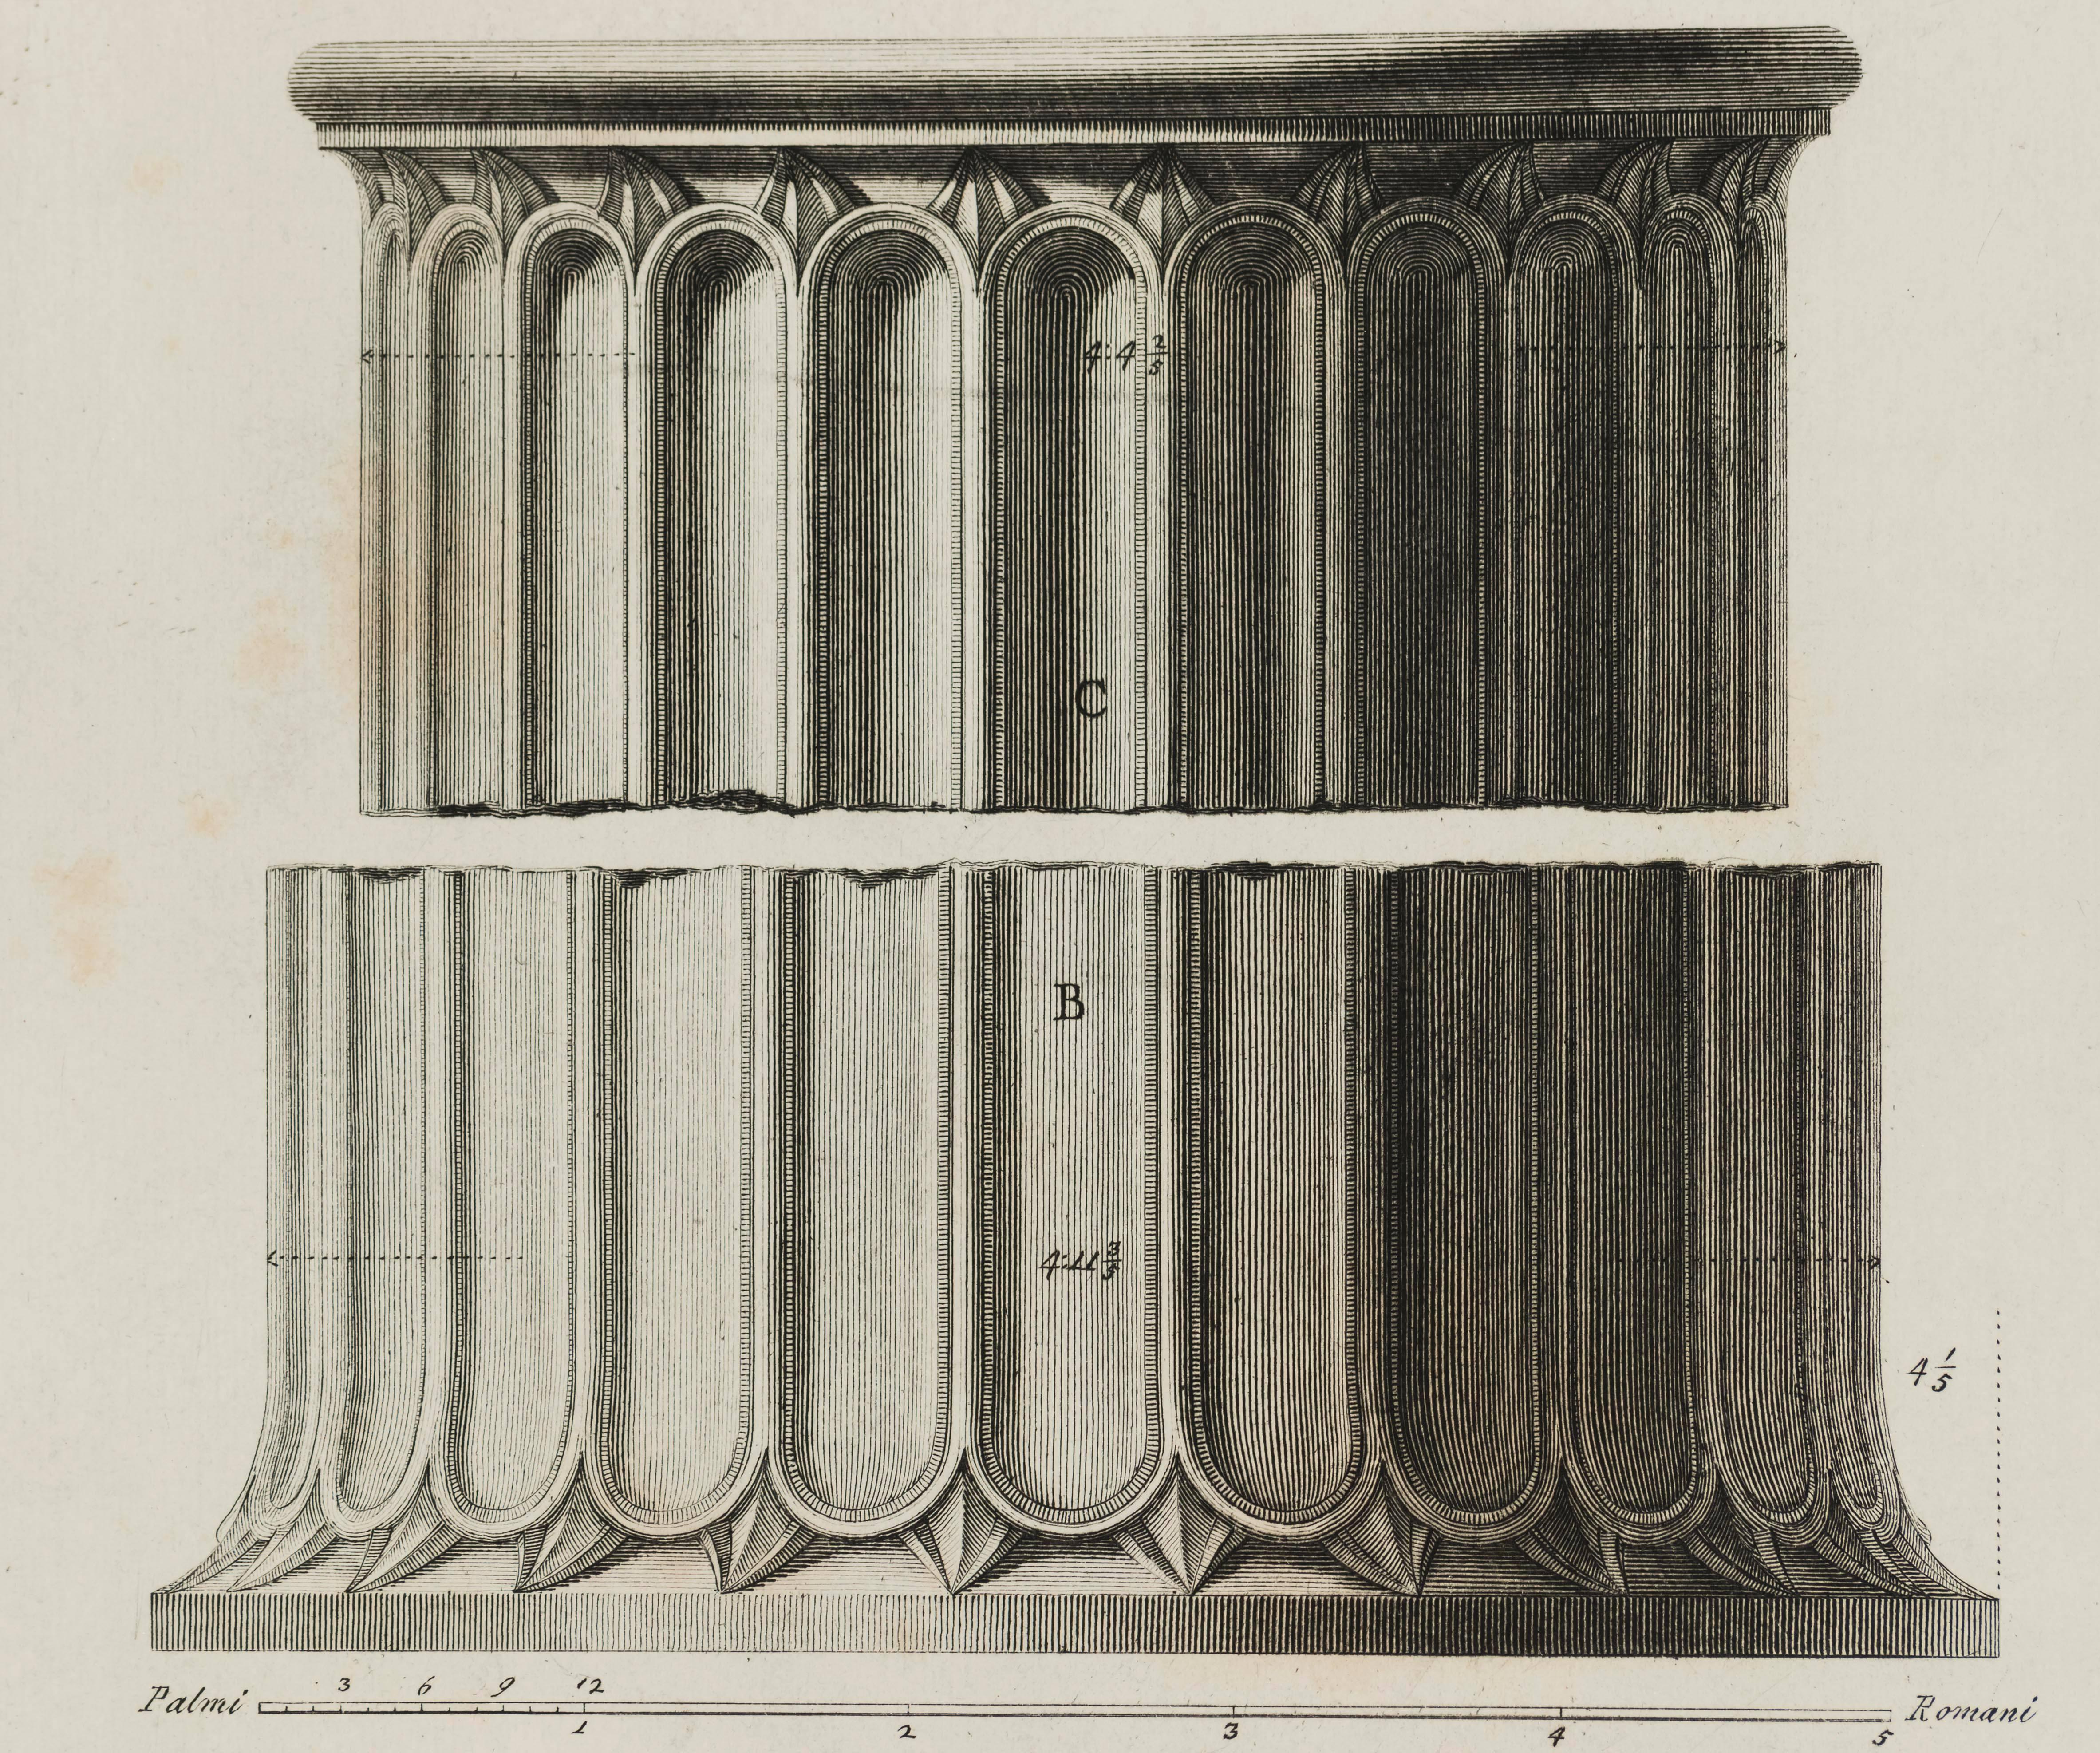 Doric Columns of the Pantheon in Rome - Print by Giovanni Battista Piranesi